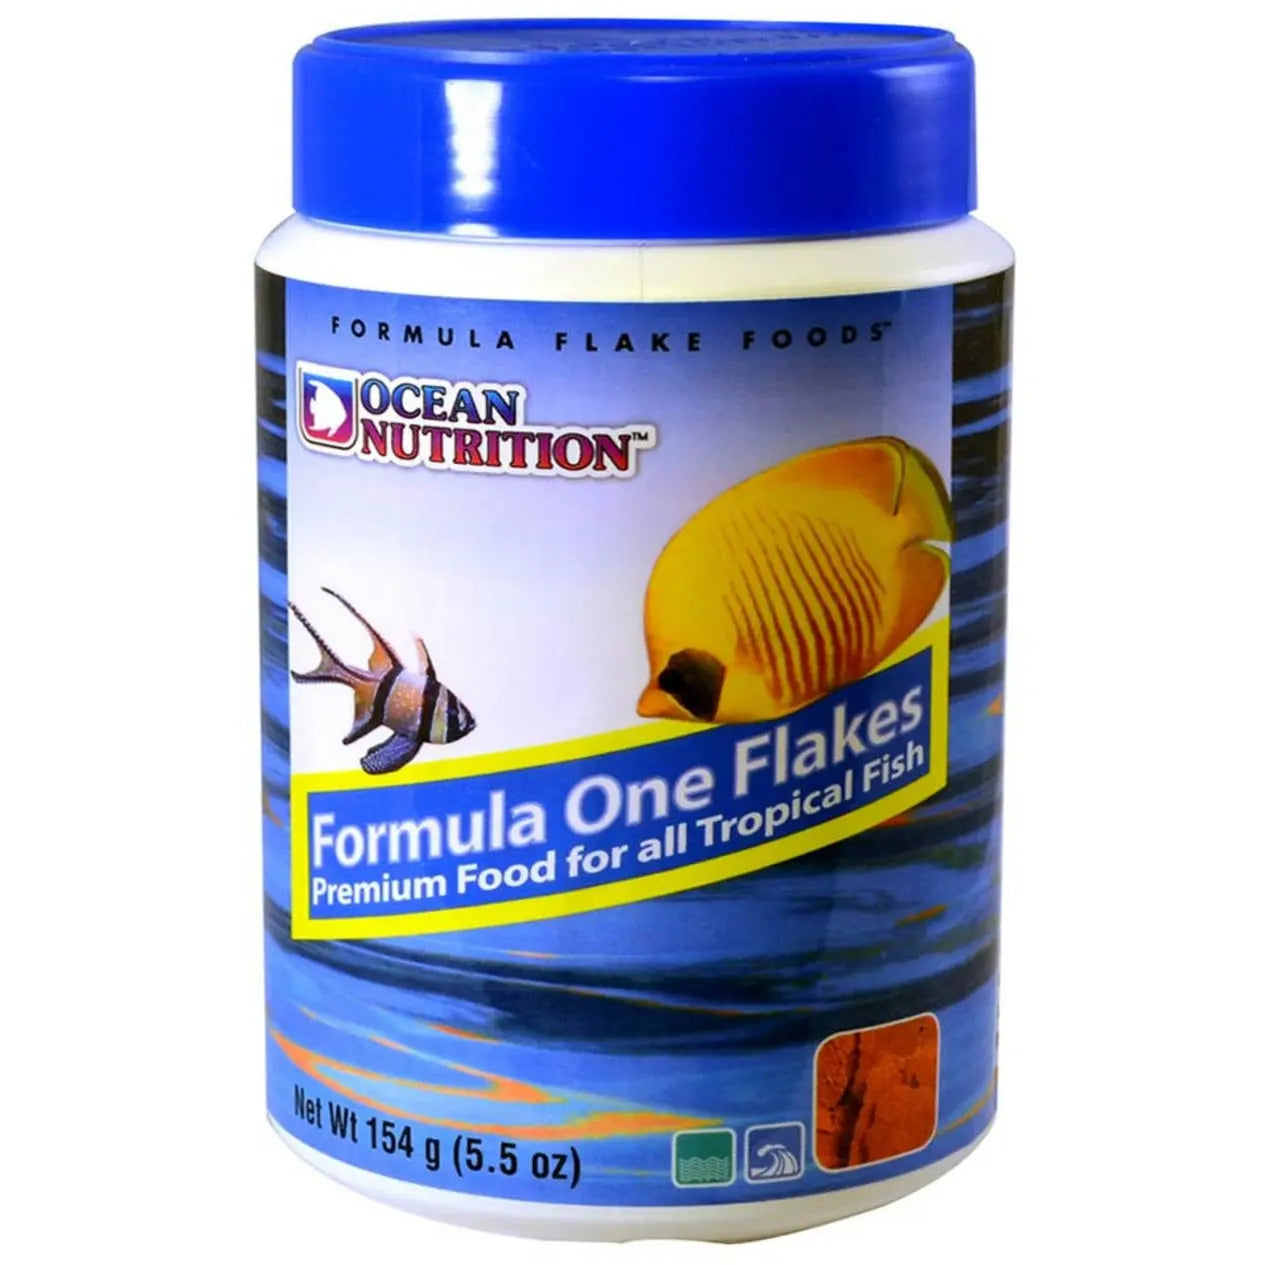 Ocean Nutrition Formula One Flakes Fish Food Ocean Nutrition